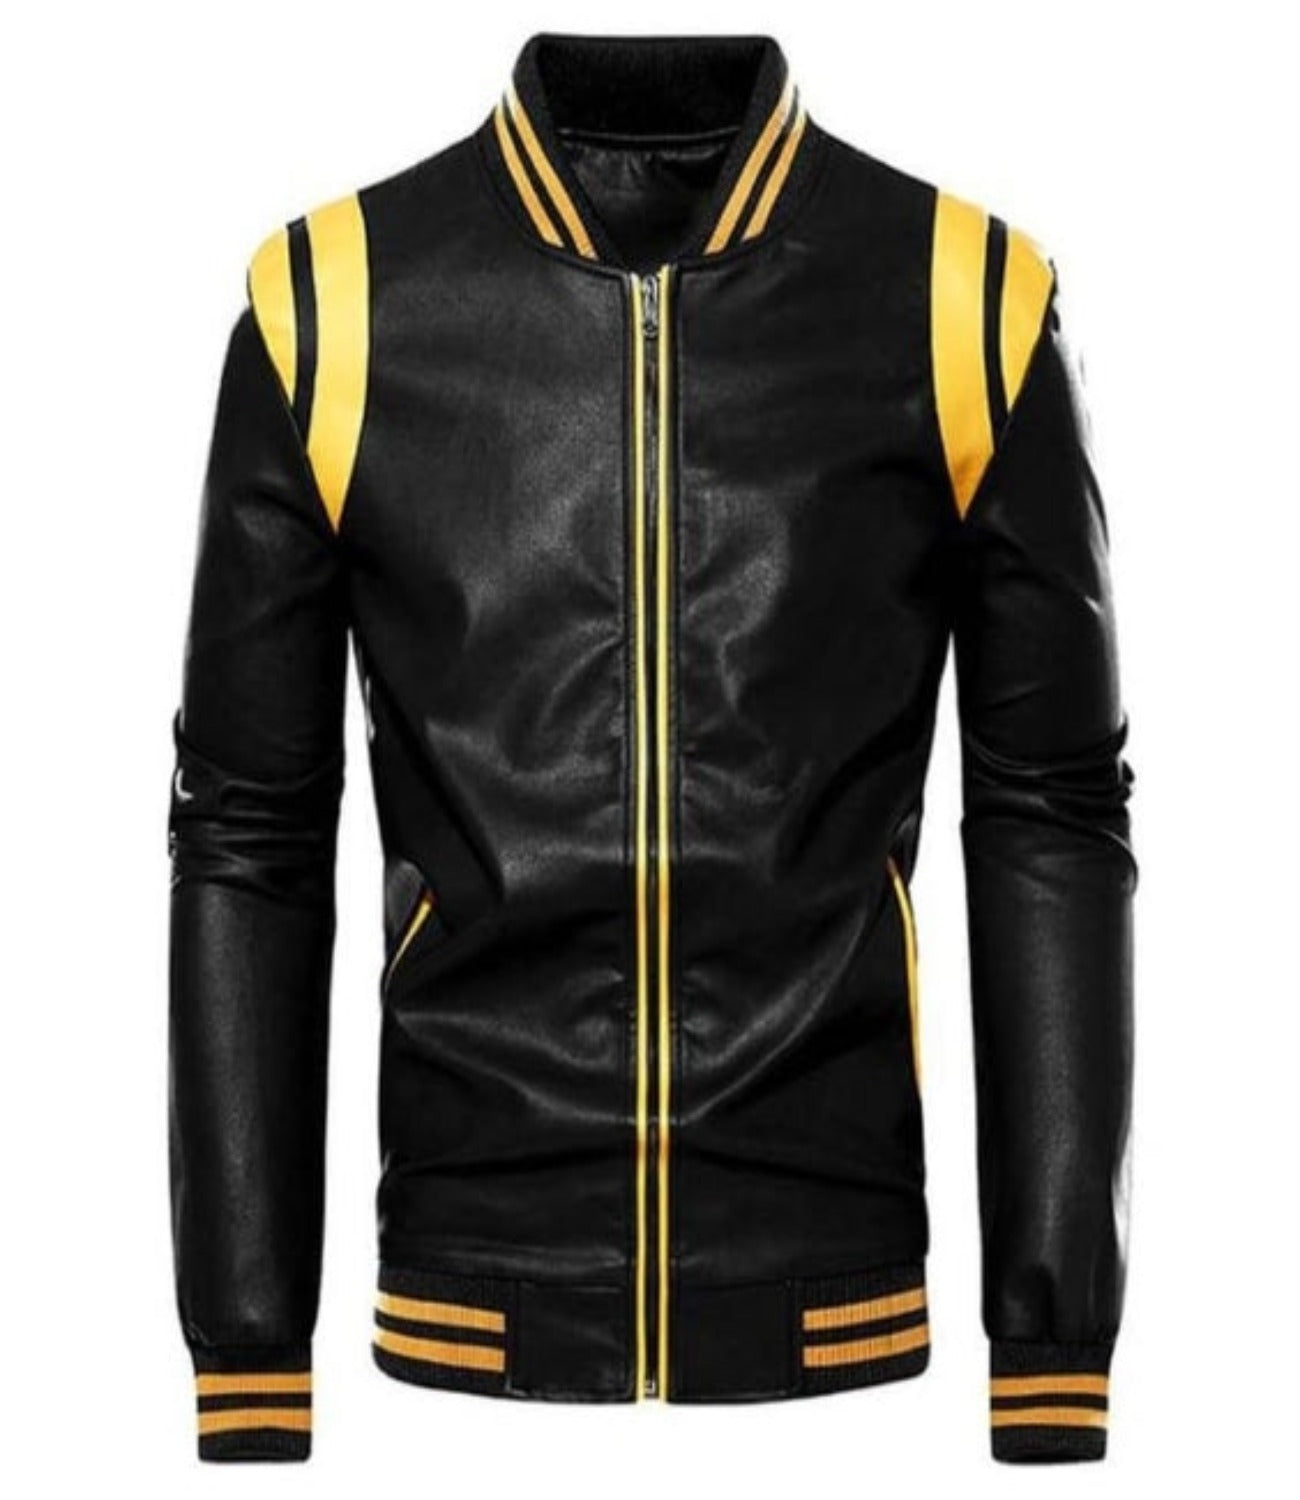 Men’s Yellow & Black Casual Biker Leather Jacket